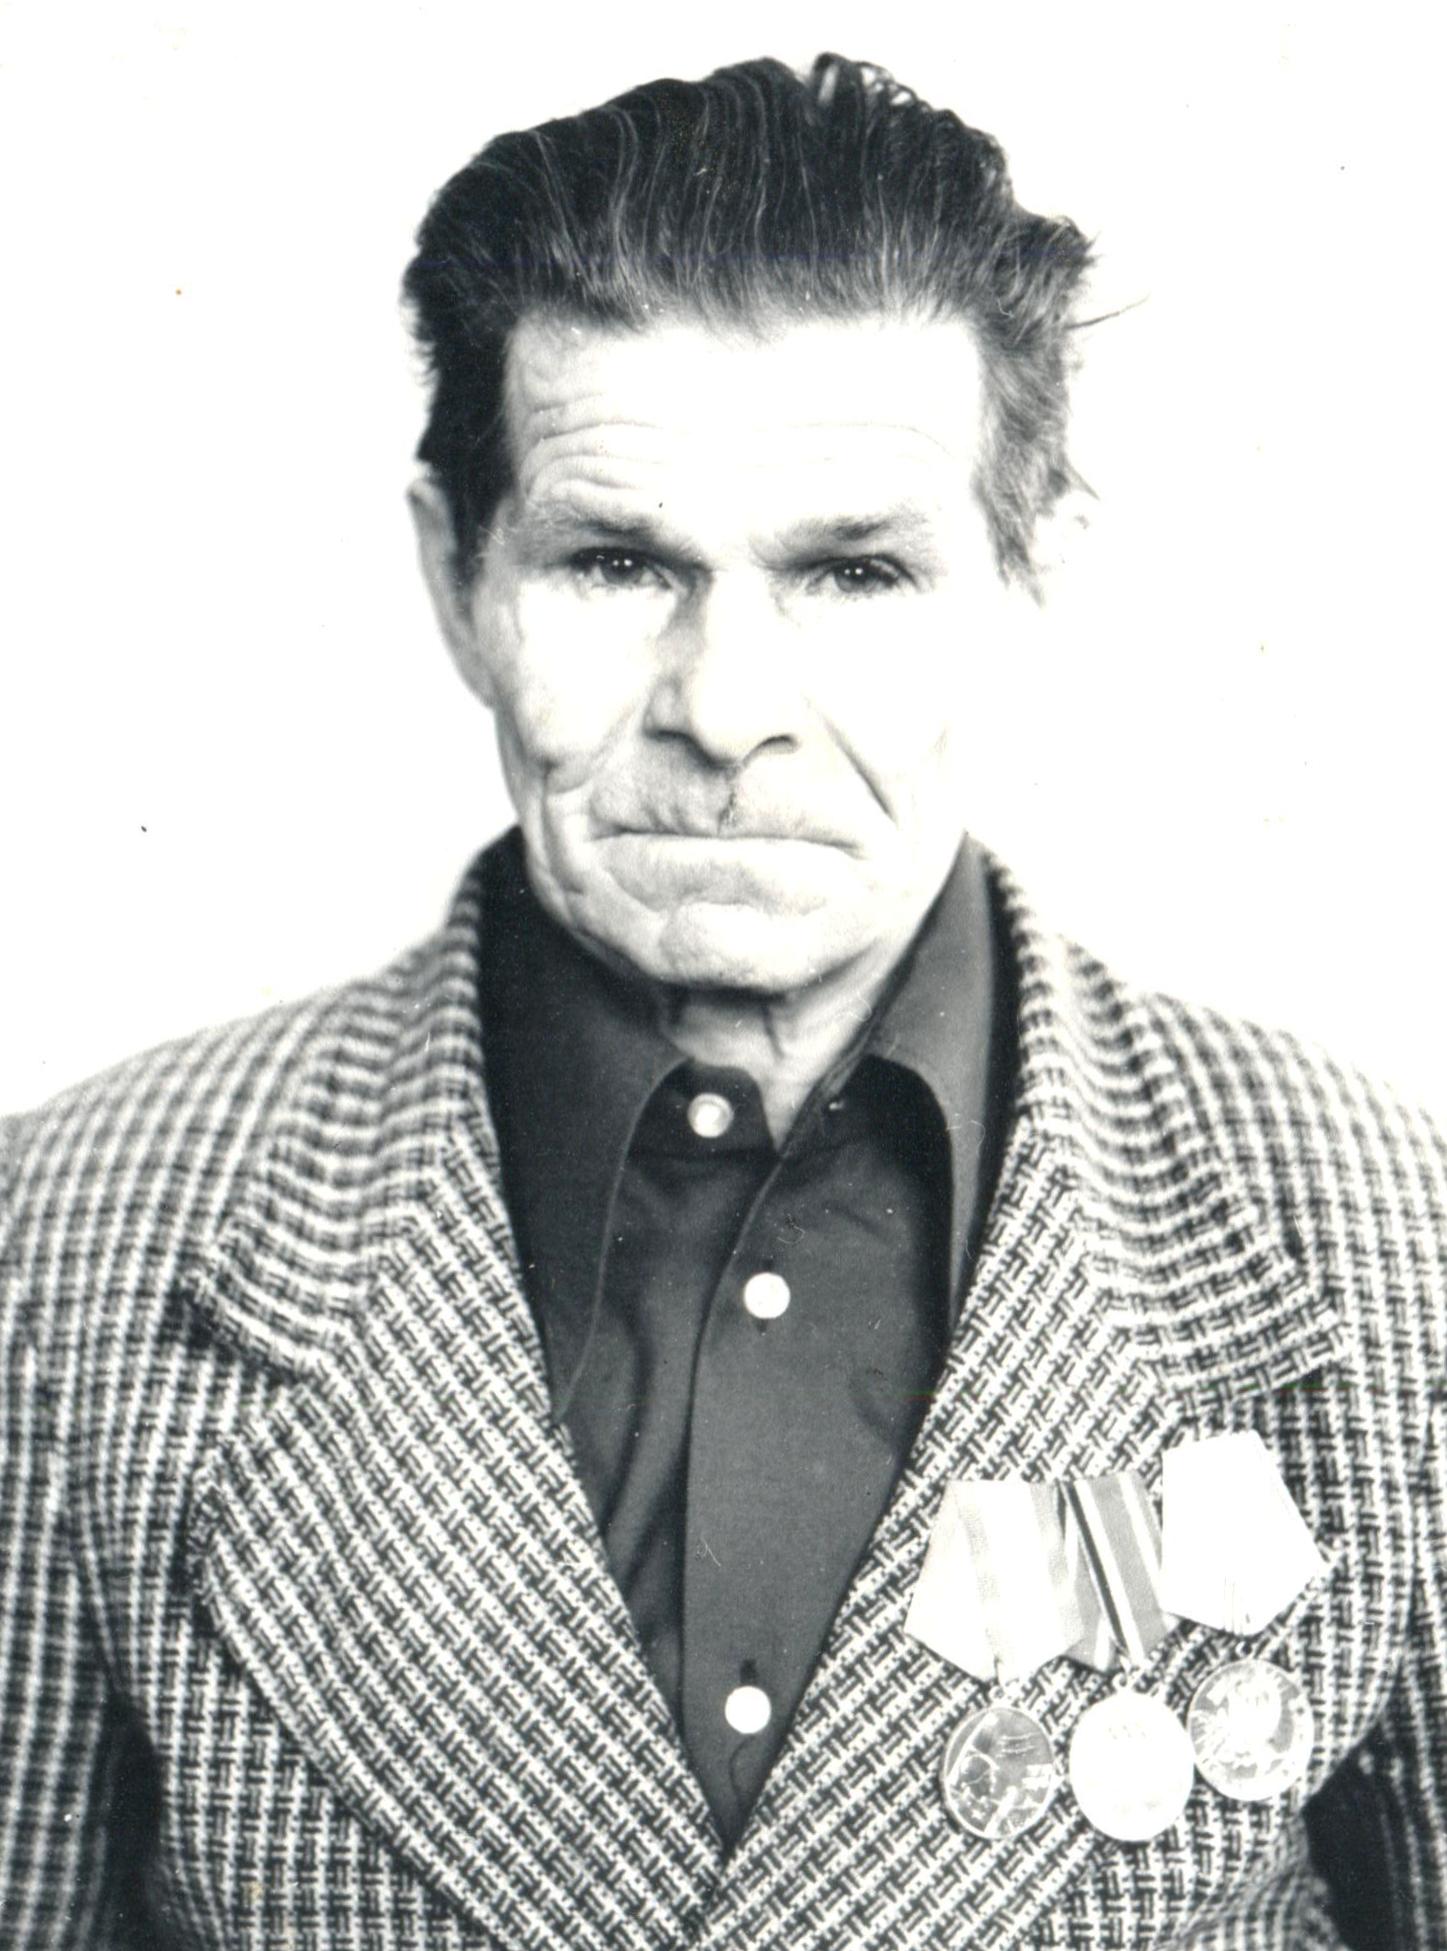 Пирогов Иван Михайлович 20.04.1923 - май 1987 г.г. 